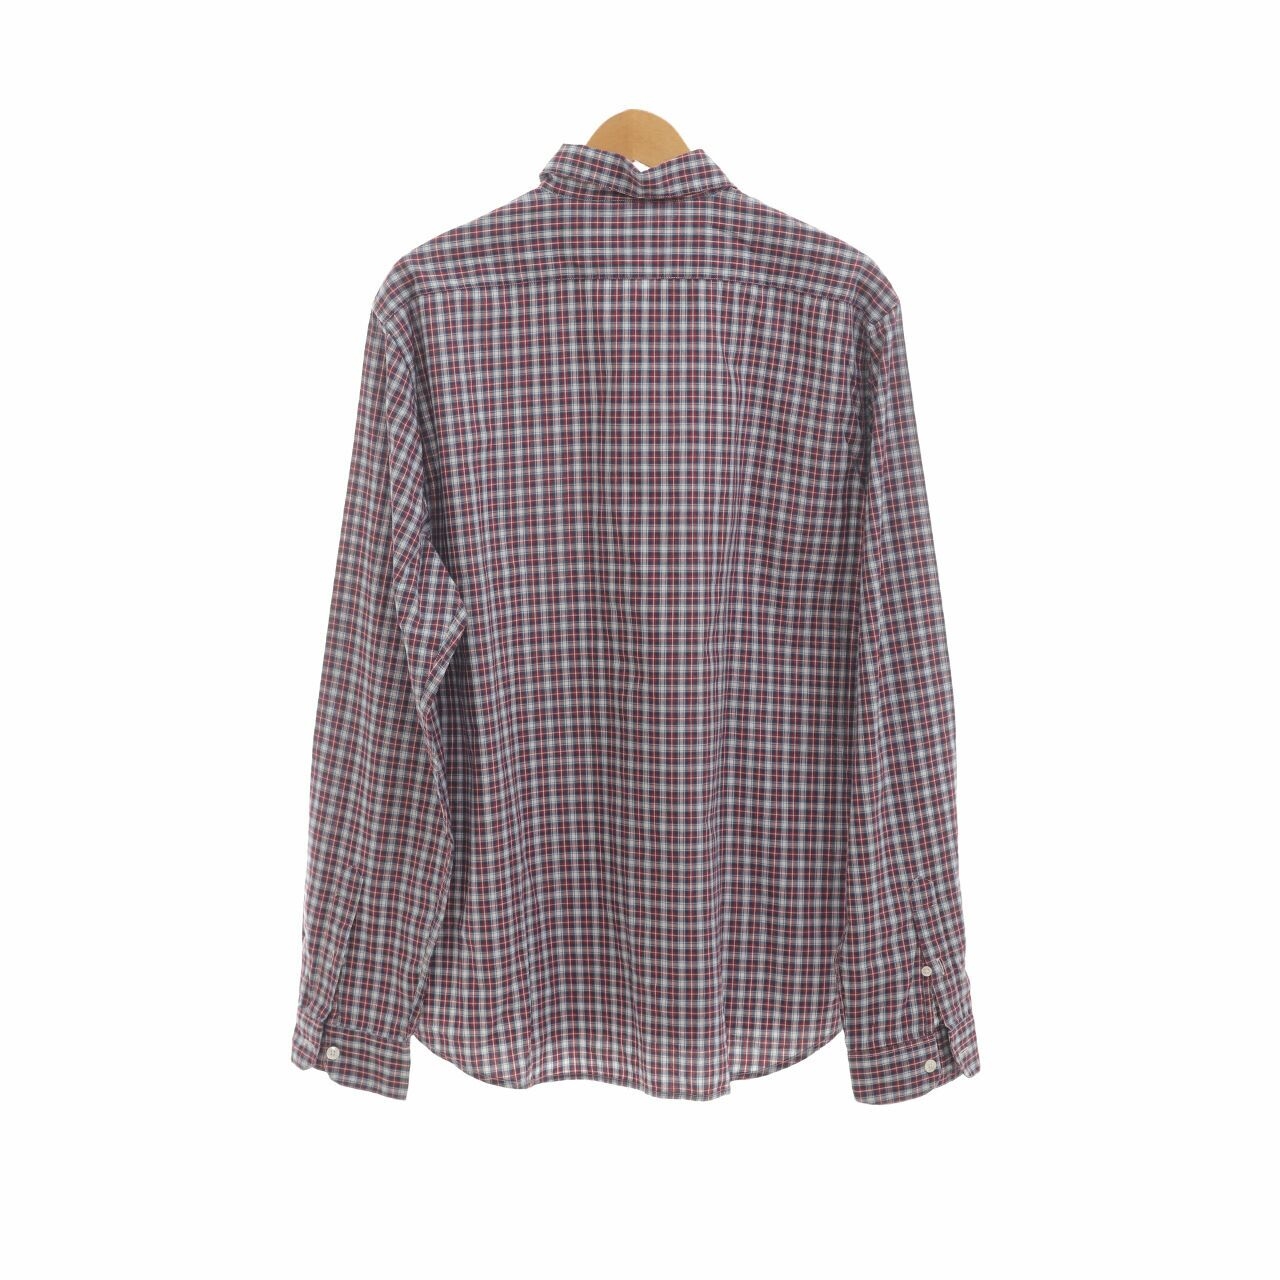 Cuisse de Grenouille Multi Checkered Shirt